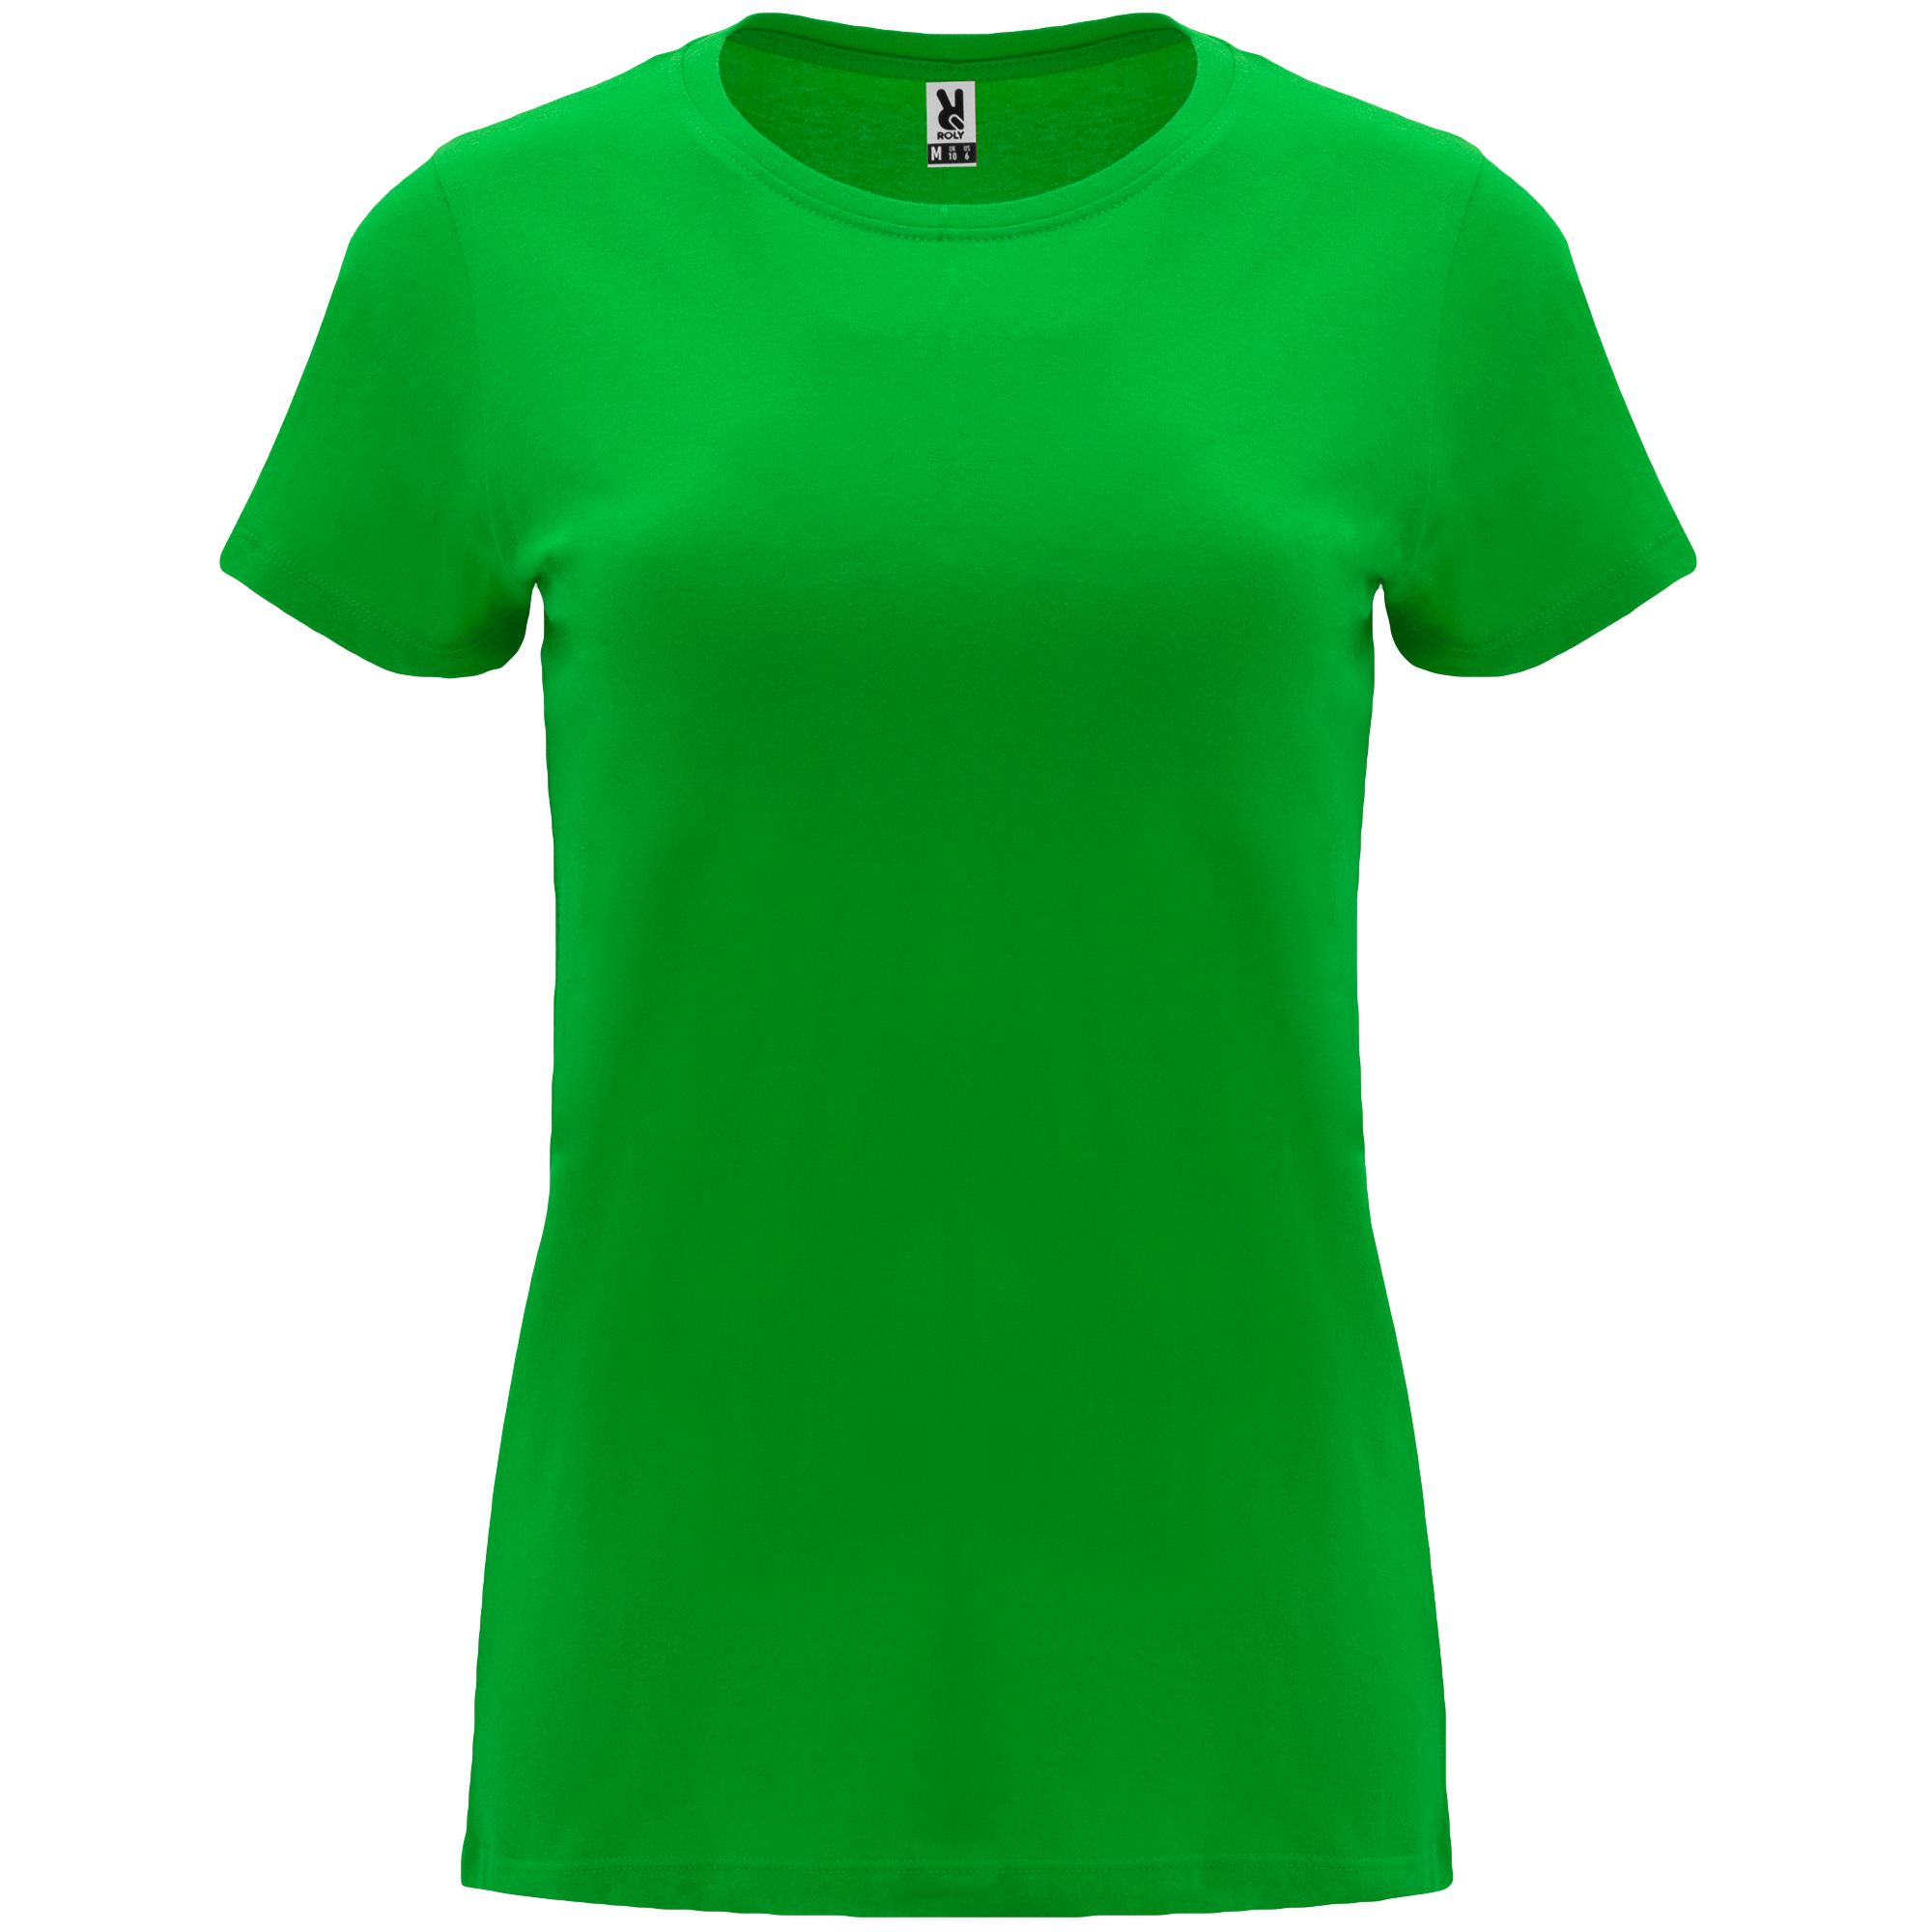 r6683-roly-capri-t-shirt-donna-verde-prato.jpg